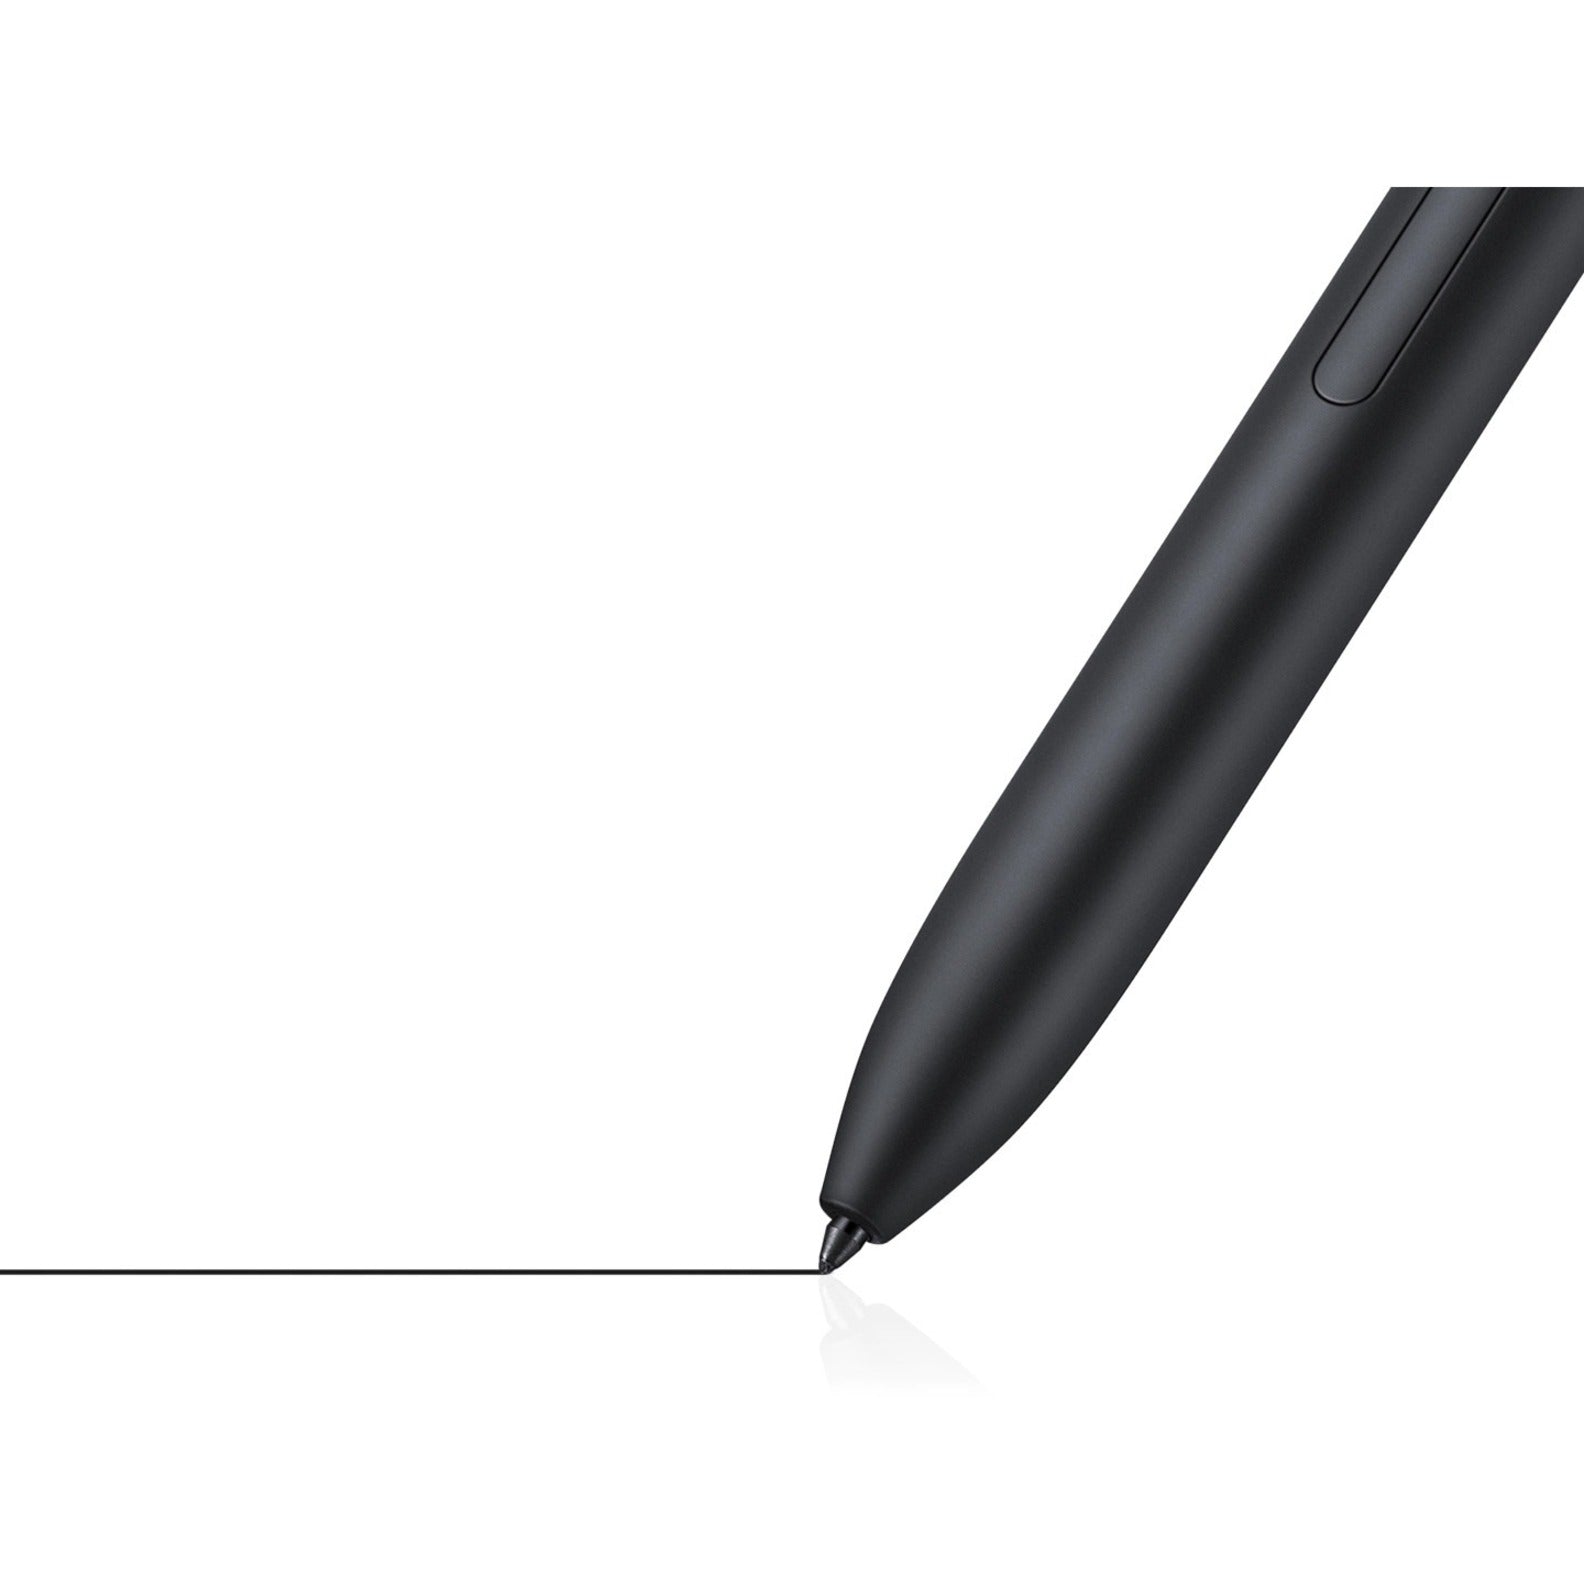 SAMSUNG Galaxy Tab S7 | S7+ S Pen, Mystic Black